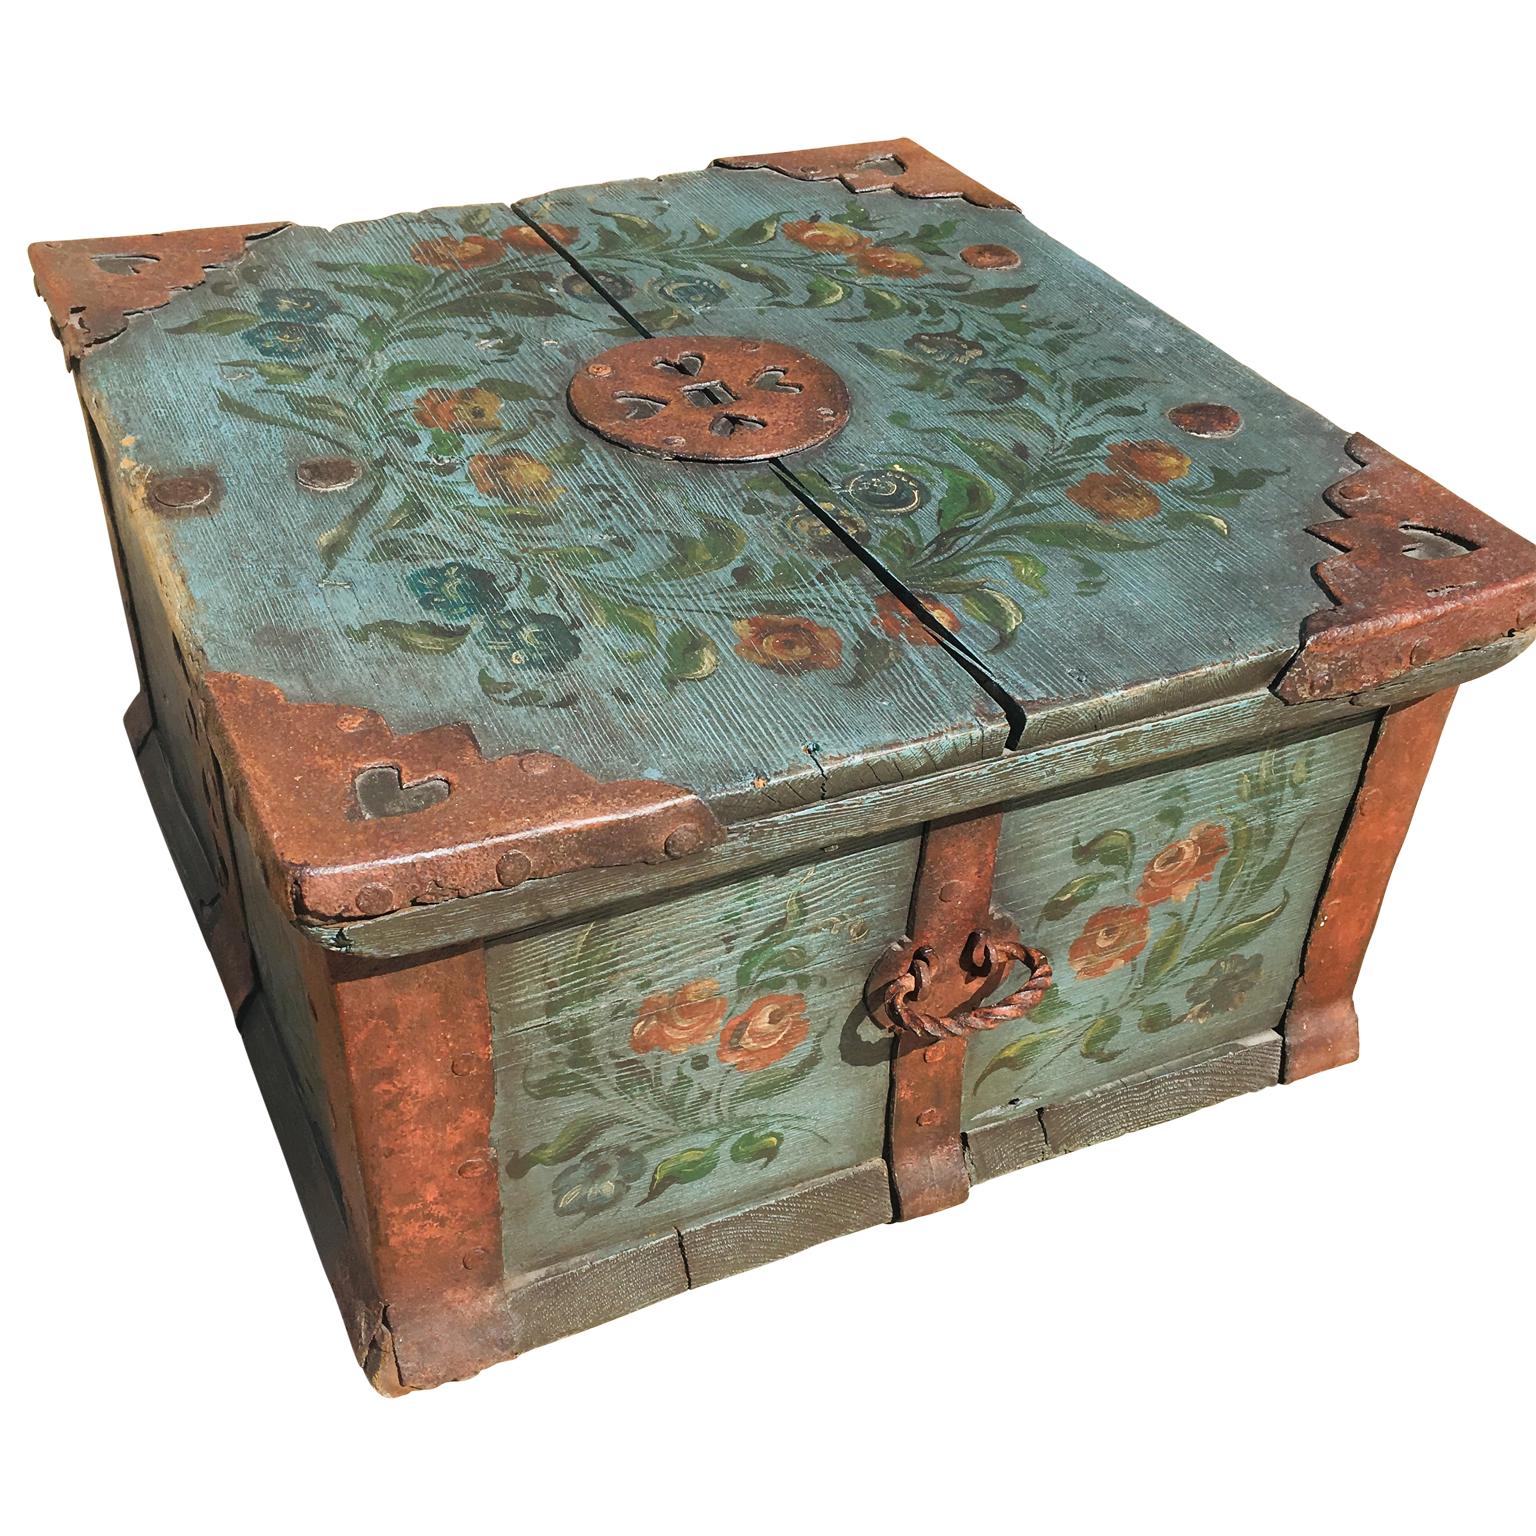 Swedish 18th century original painted decorative box, monogrammed and dated 1792.